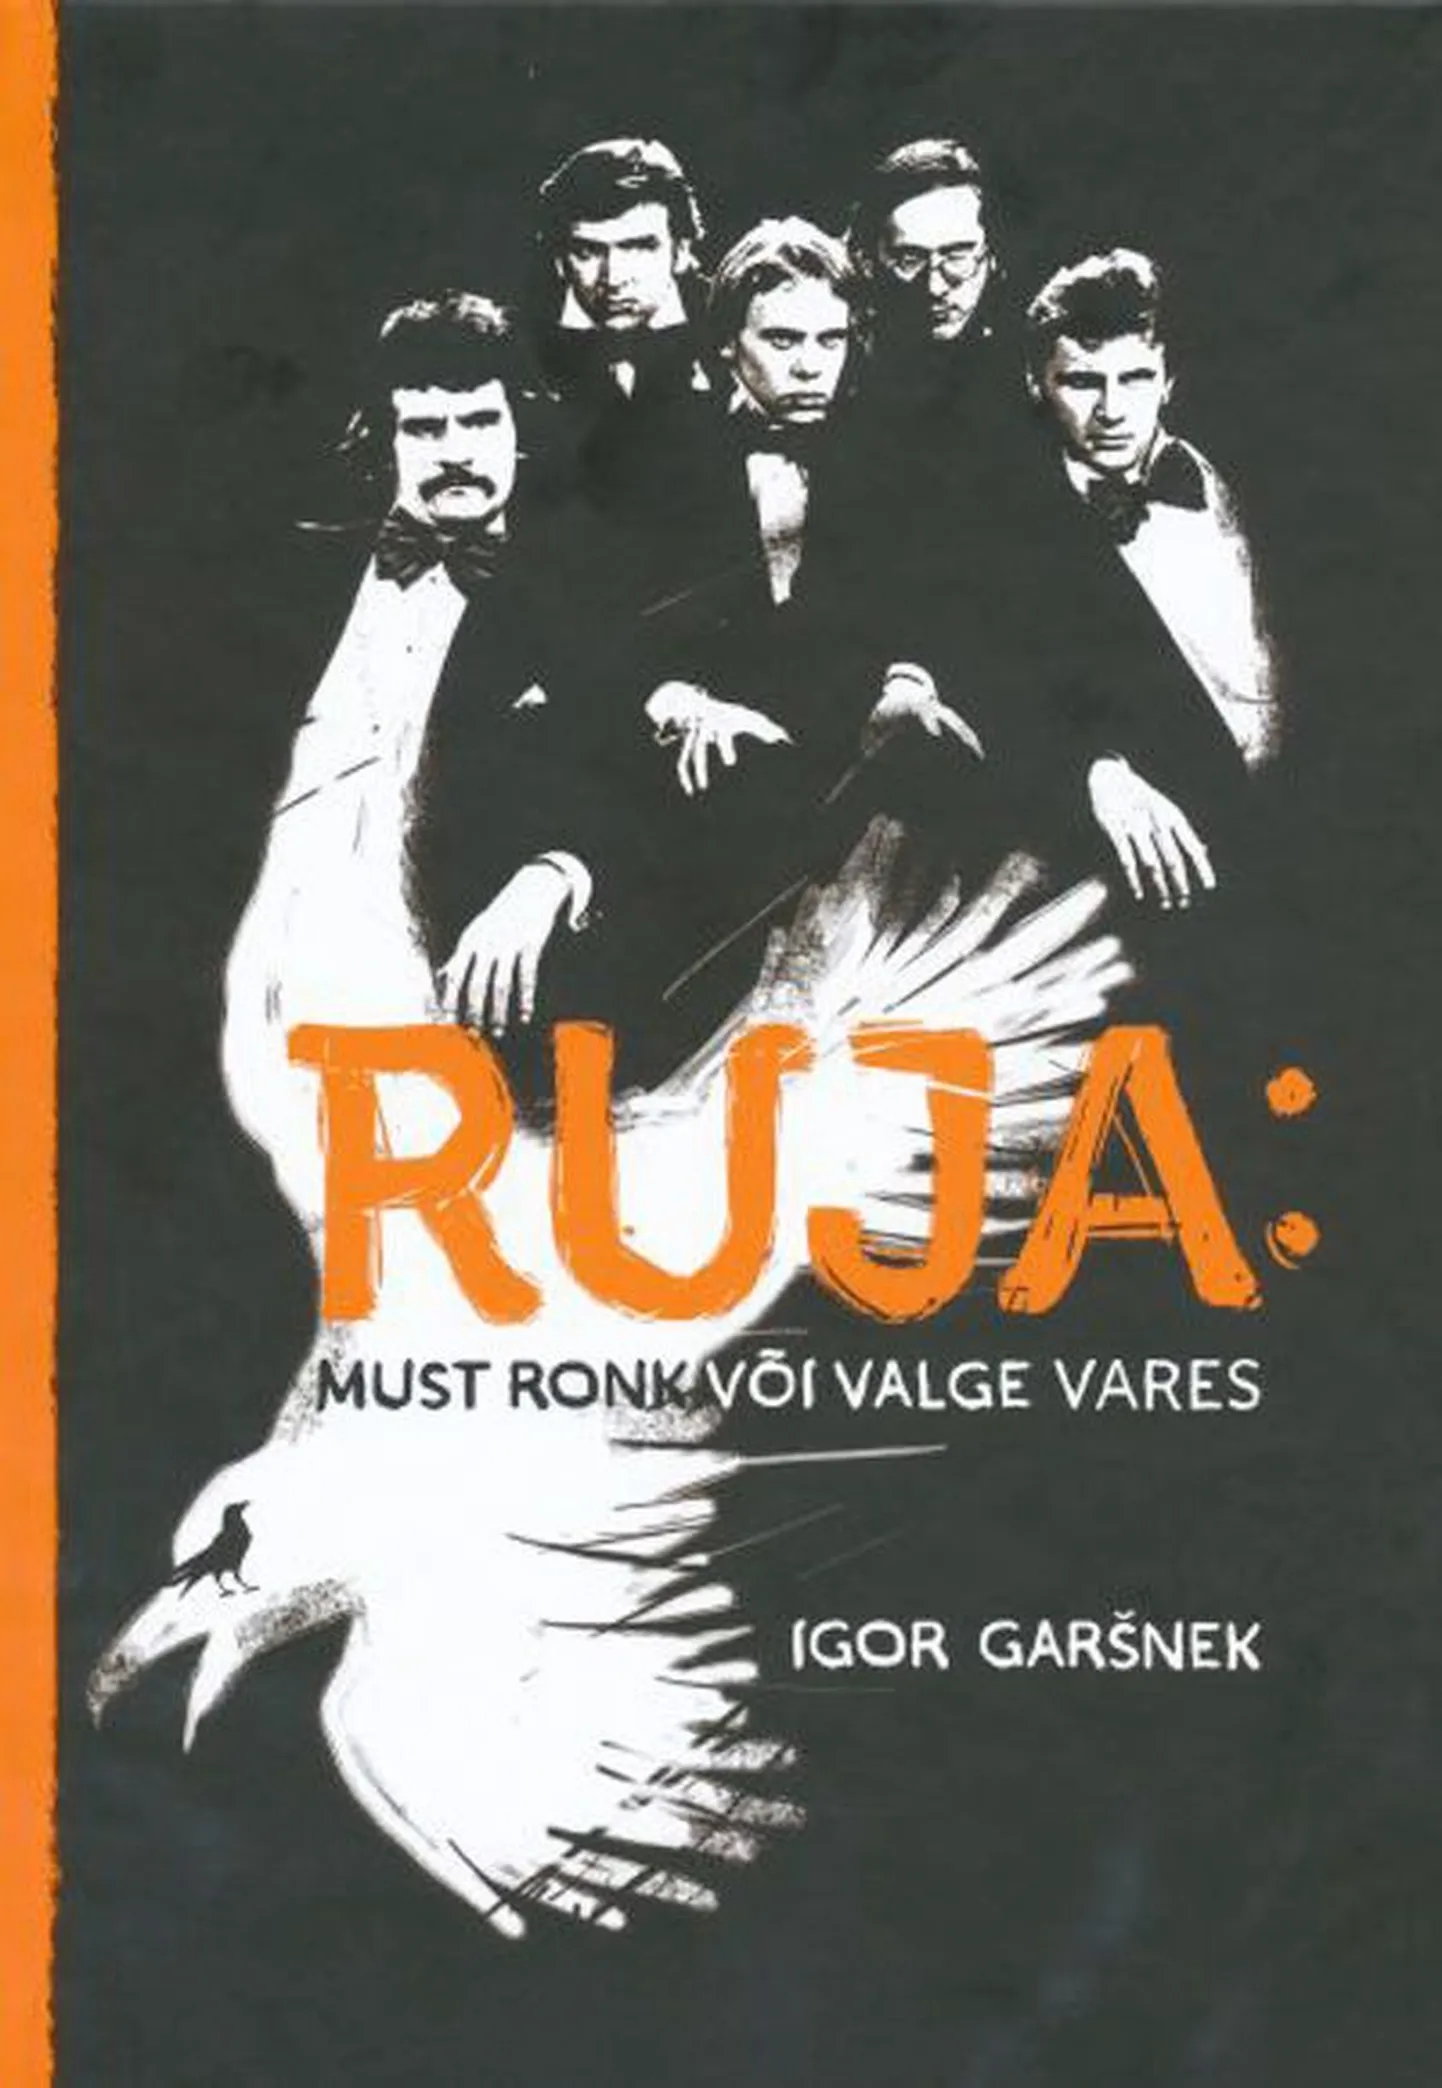 Raamat
Igor Garšnek
«Ruja: must ronk või valge vares»
Pegasus, 2010, 254 lk